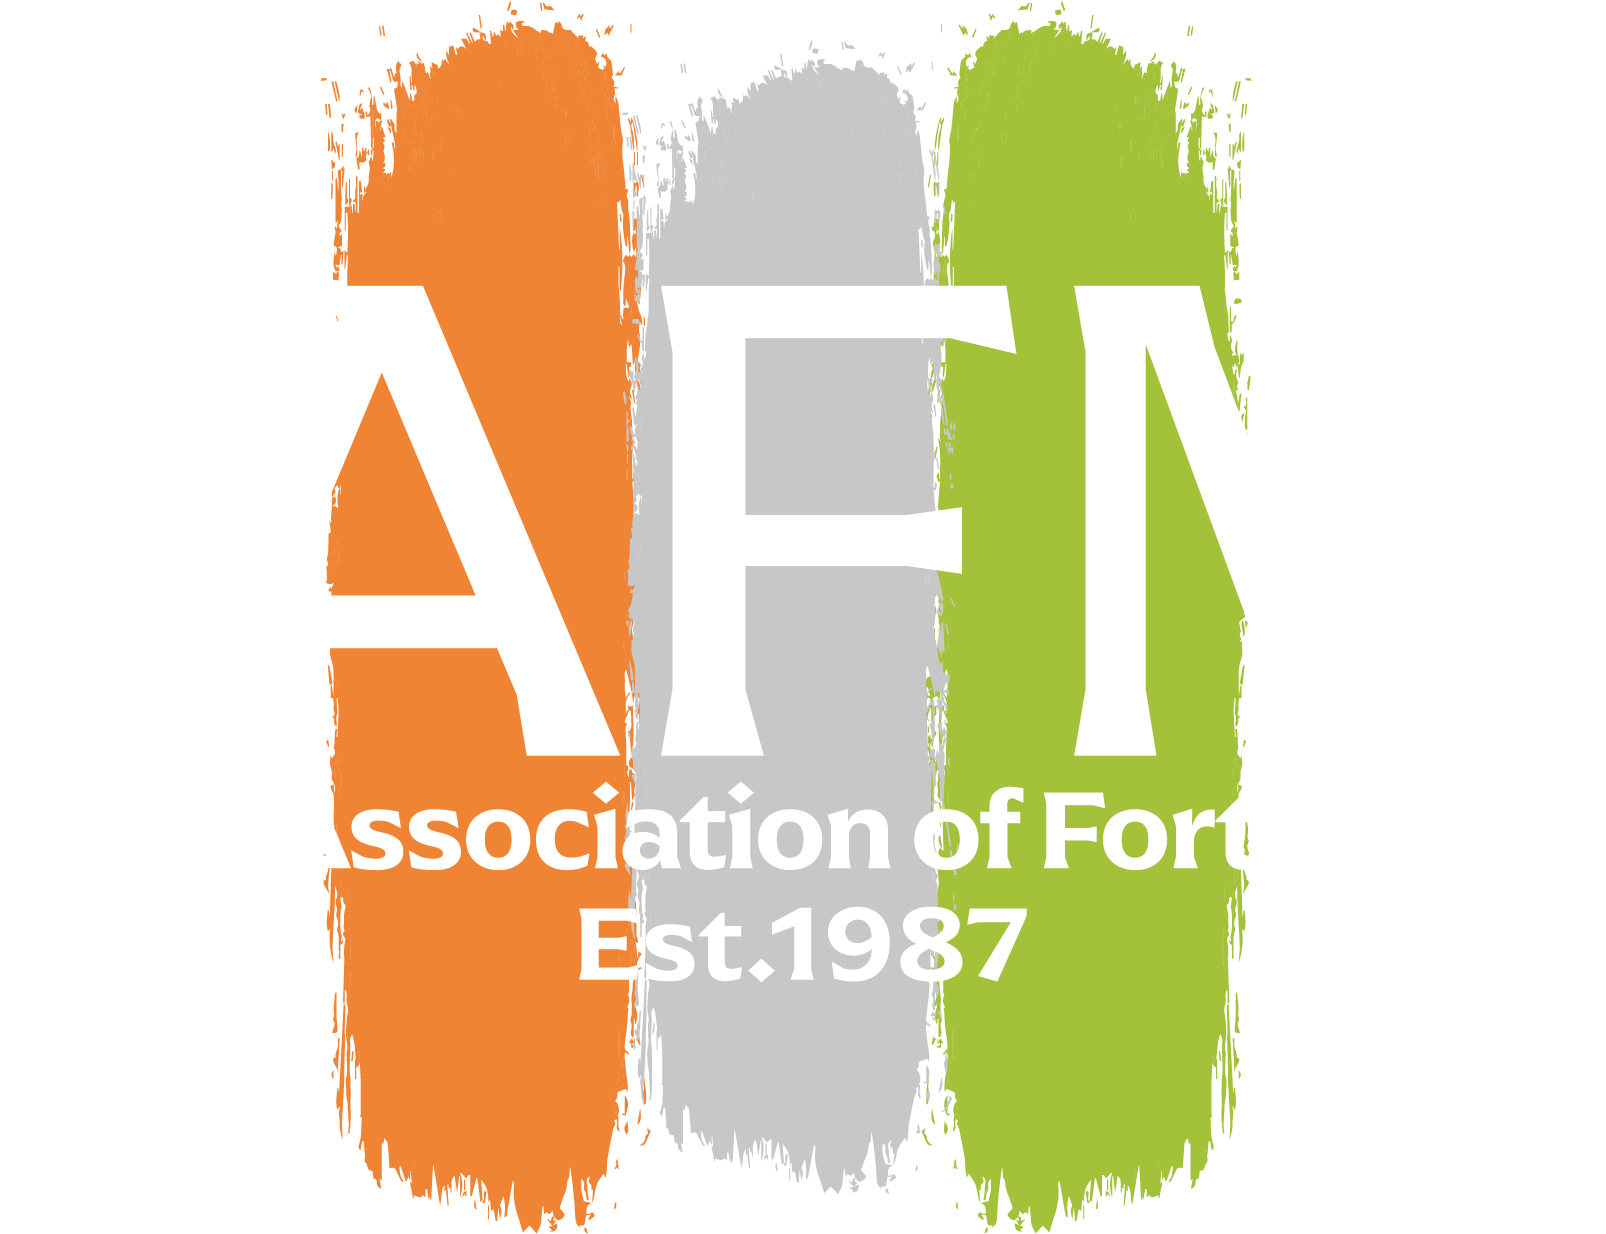 A logo for the association of fort est 1987